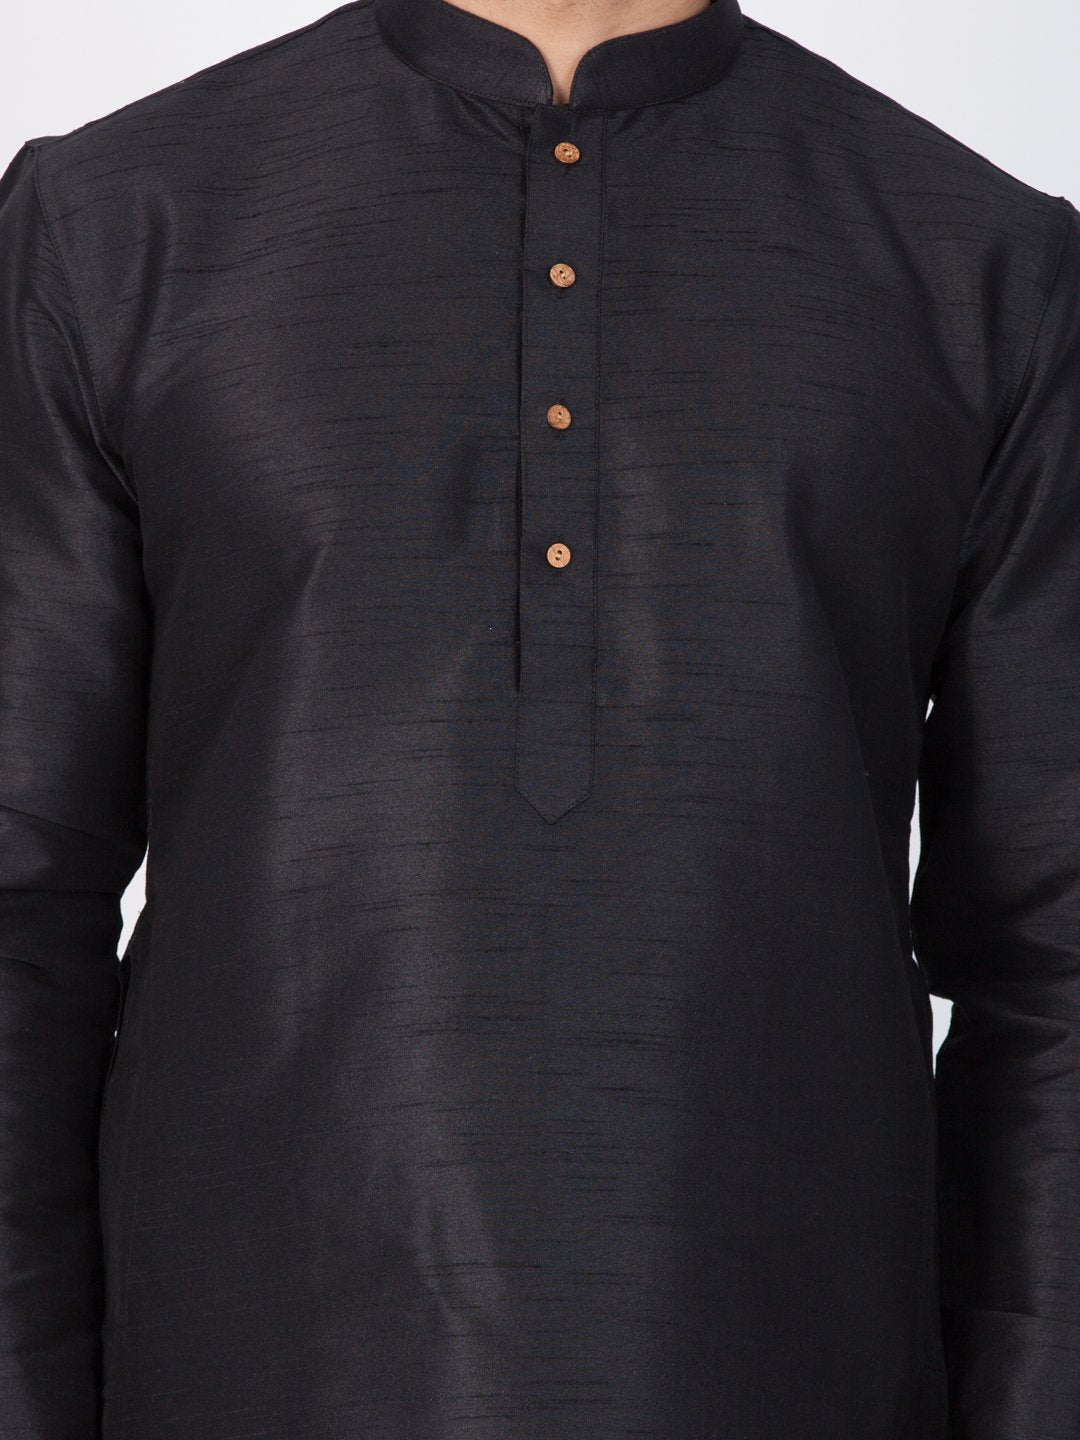 Men's Black Cotton Silk Blend Kurta and Pyjama Set - Vastramay